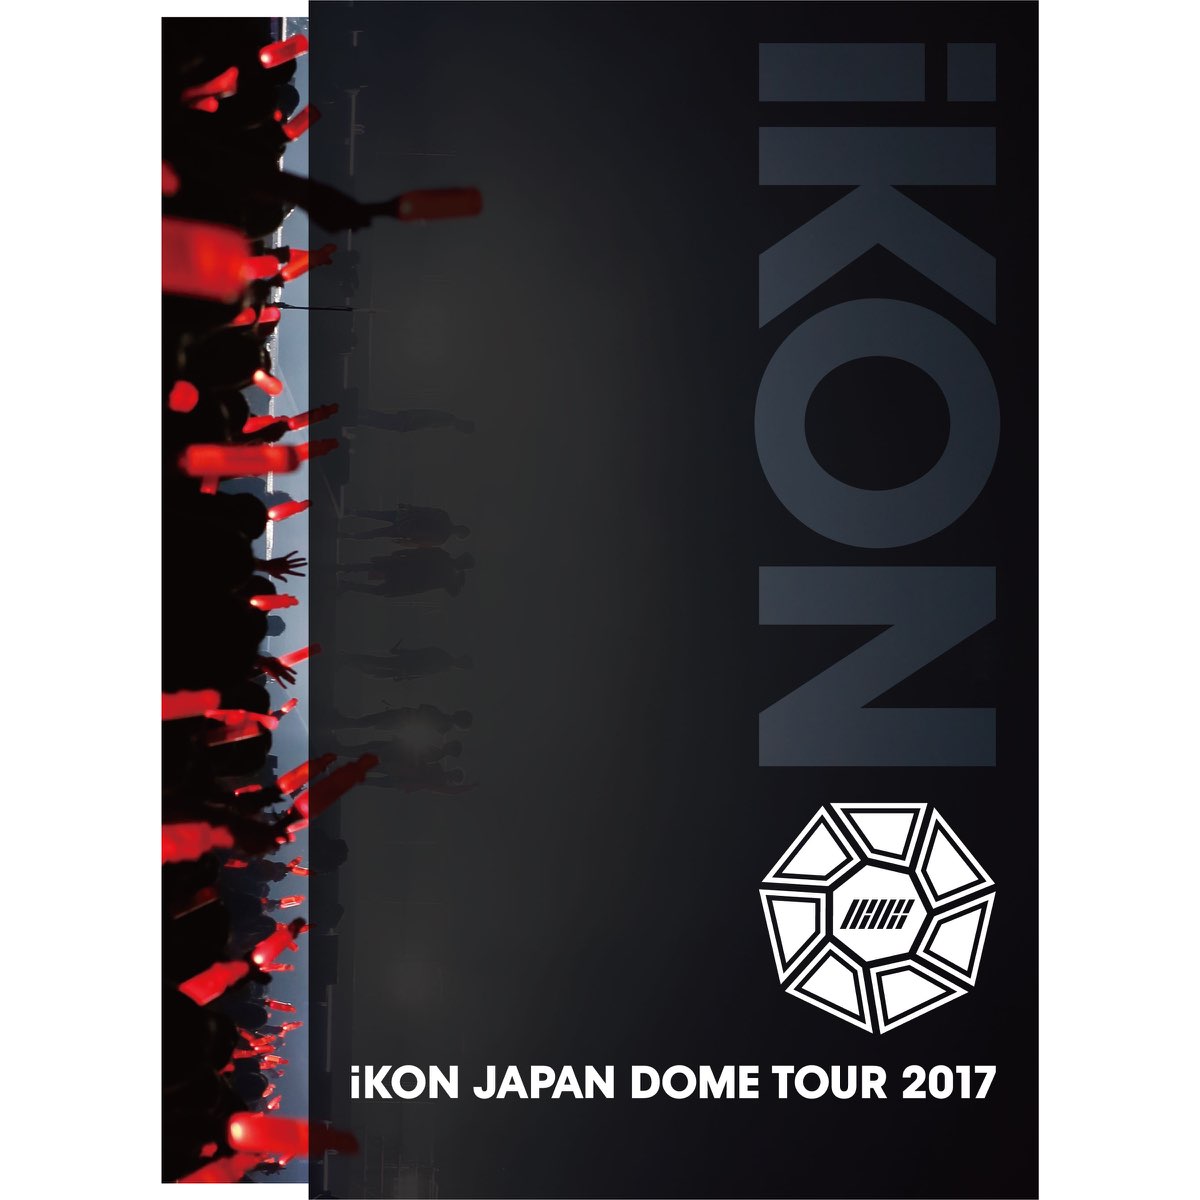 iKON JAPAN DOME TOUR 2017 - Album by iKON - Apple Music